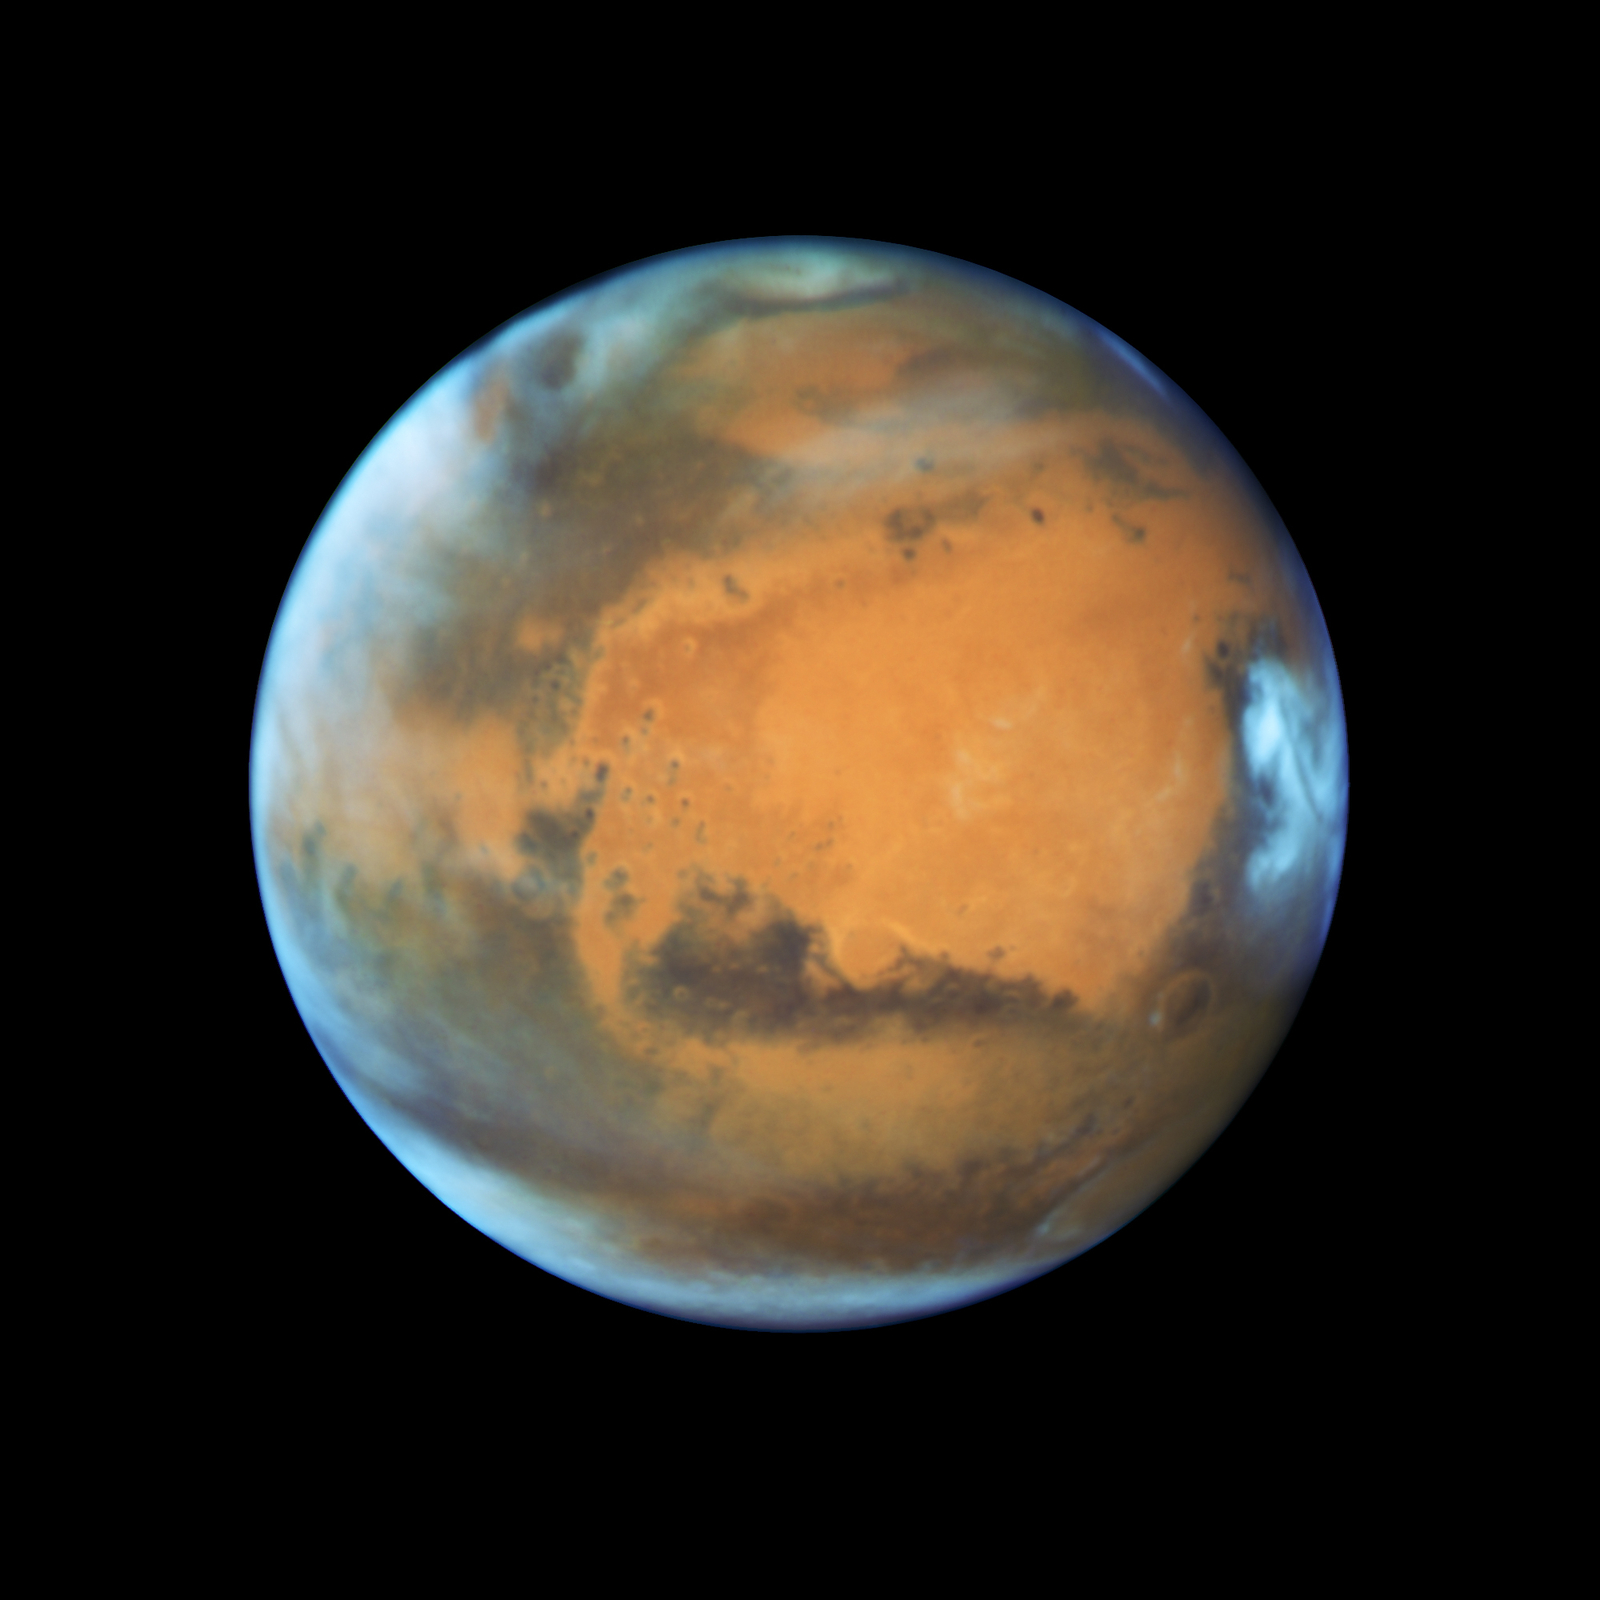 Ep. 577: Mars in Opposition